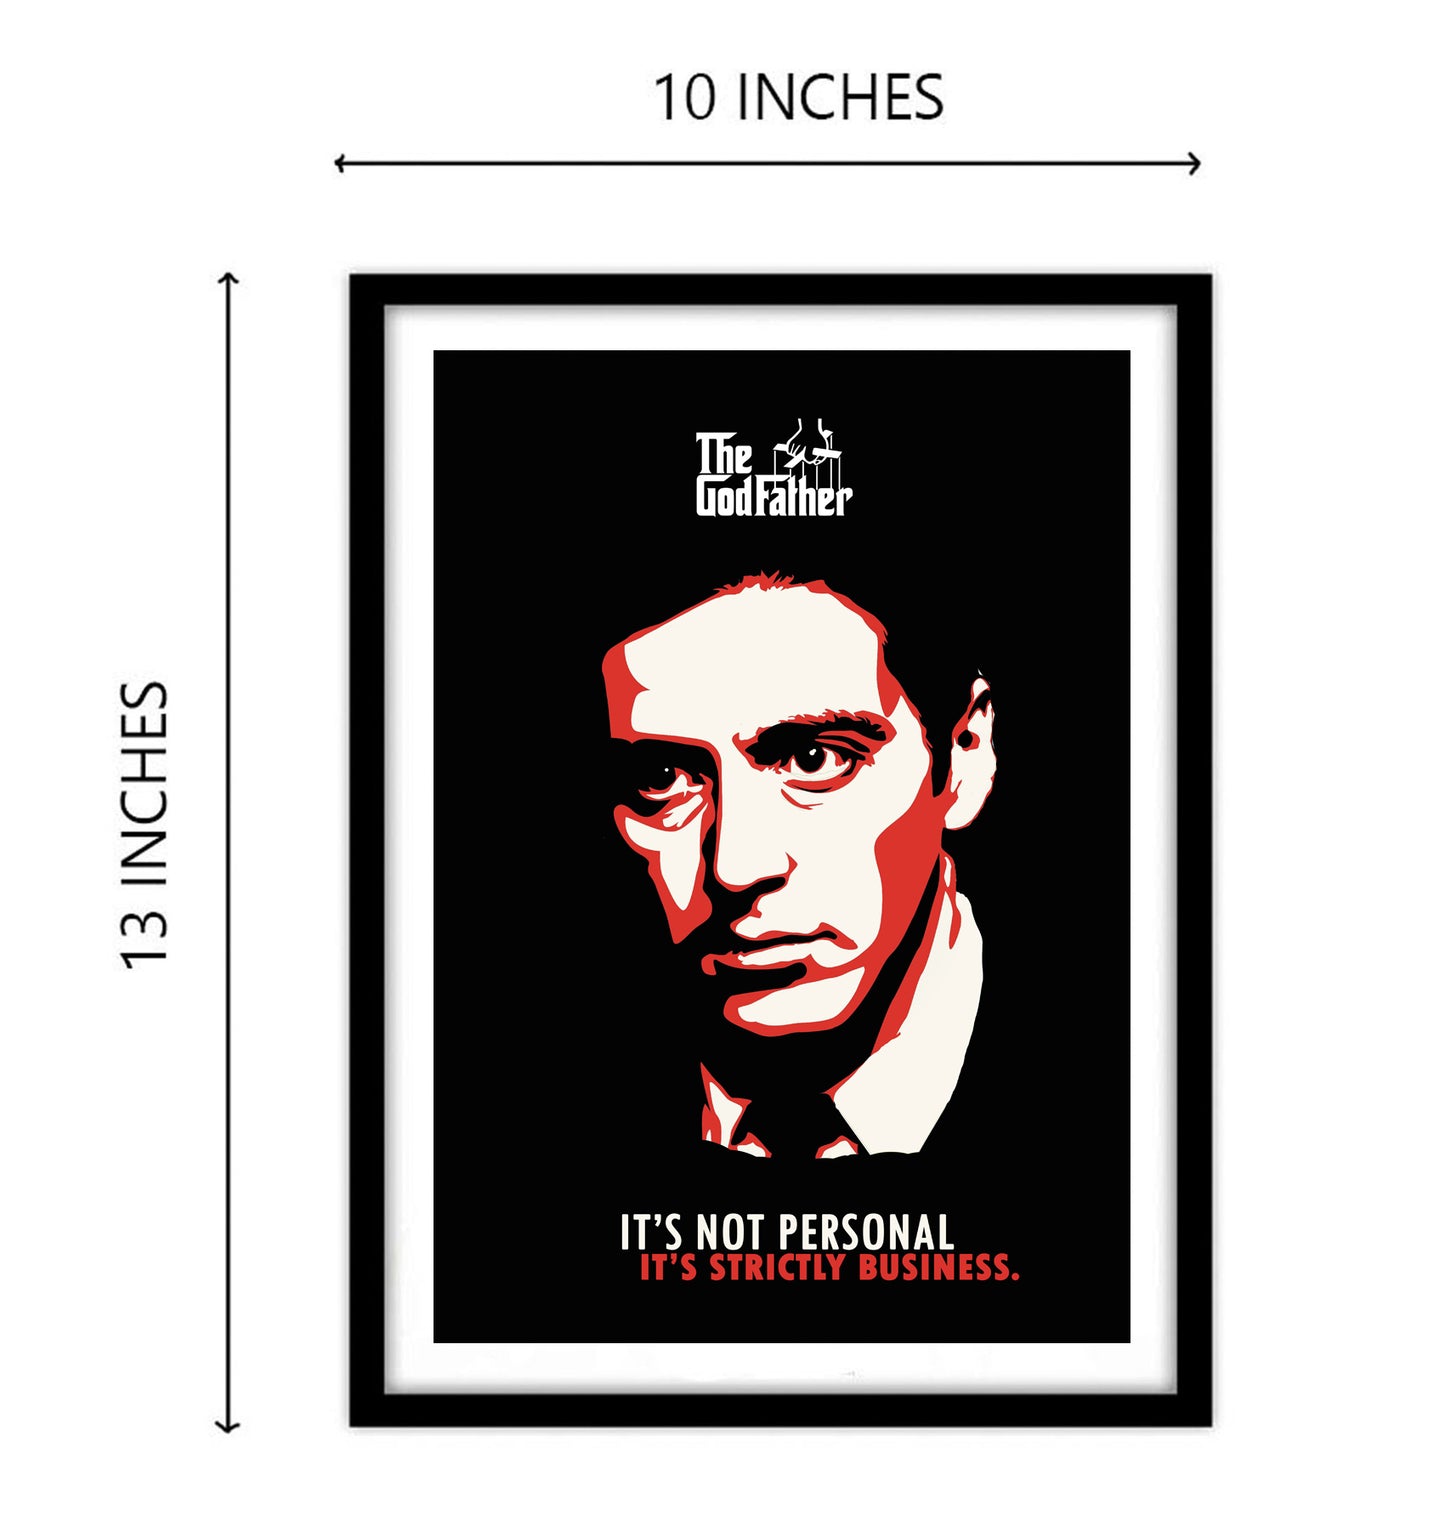 Al Pacino Godfather Series Art work